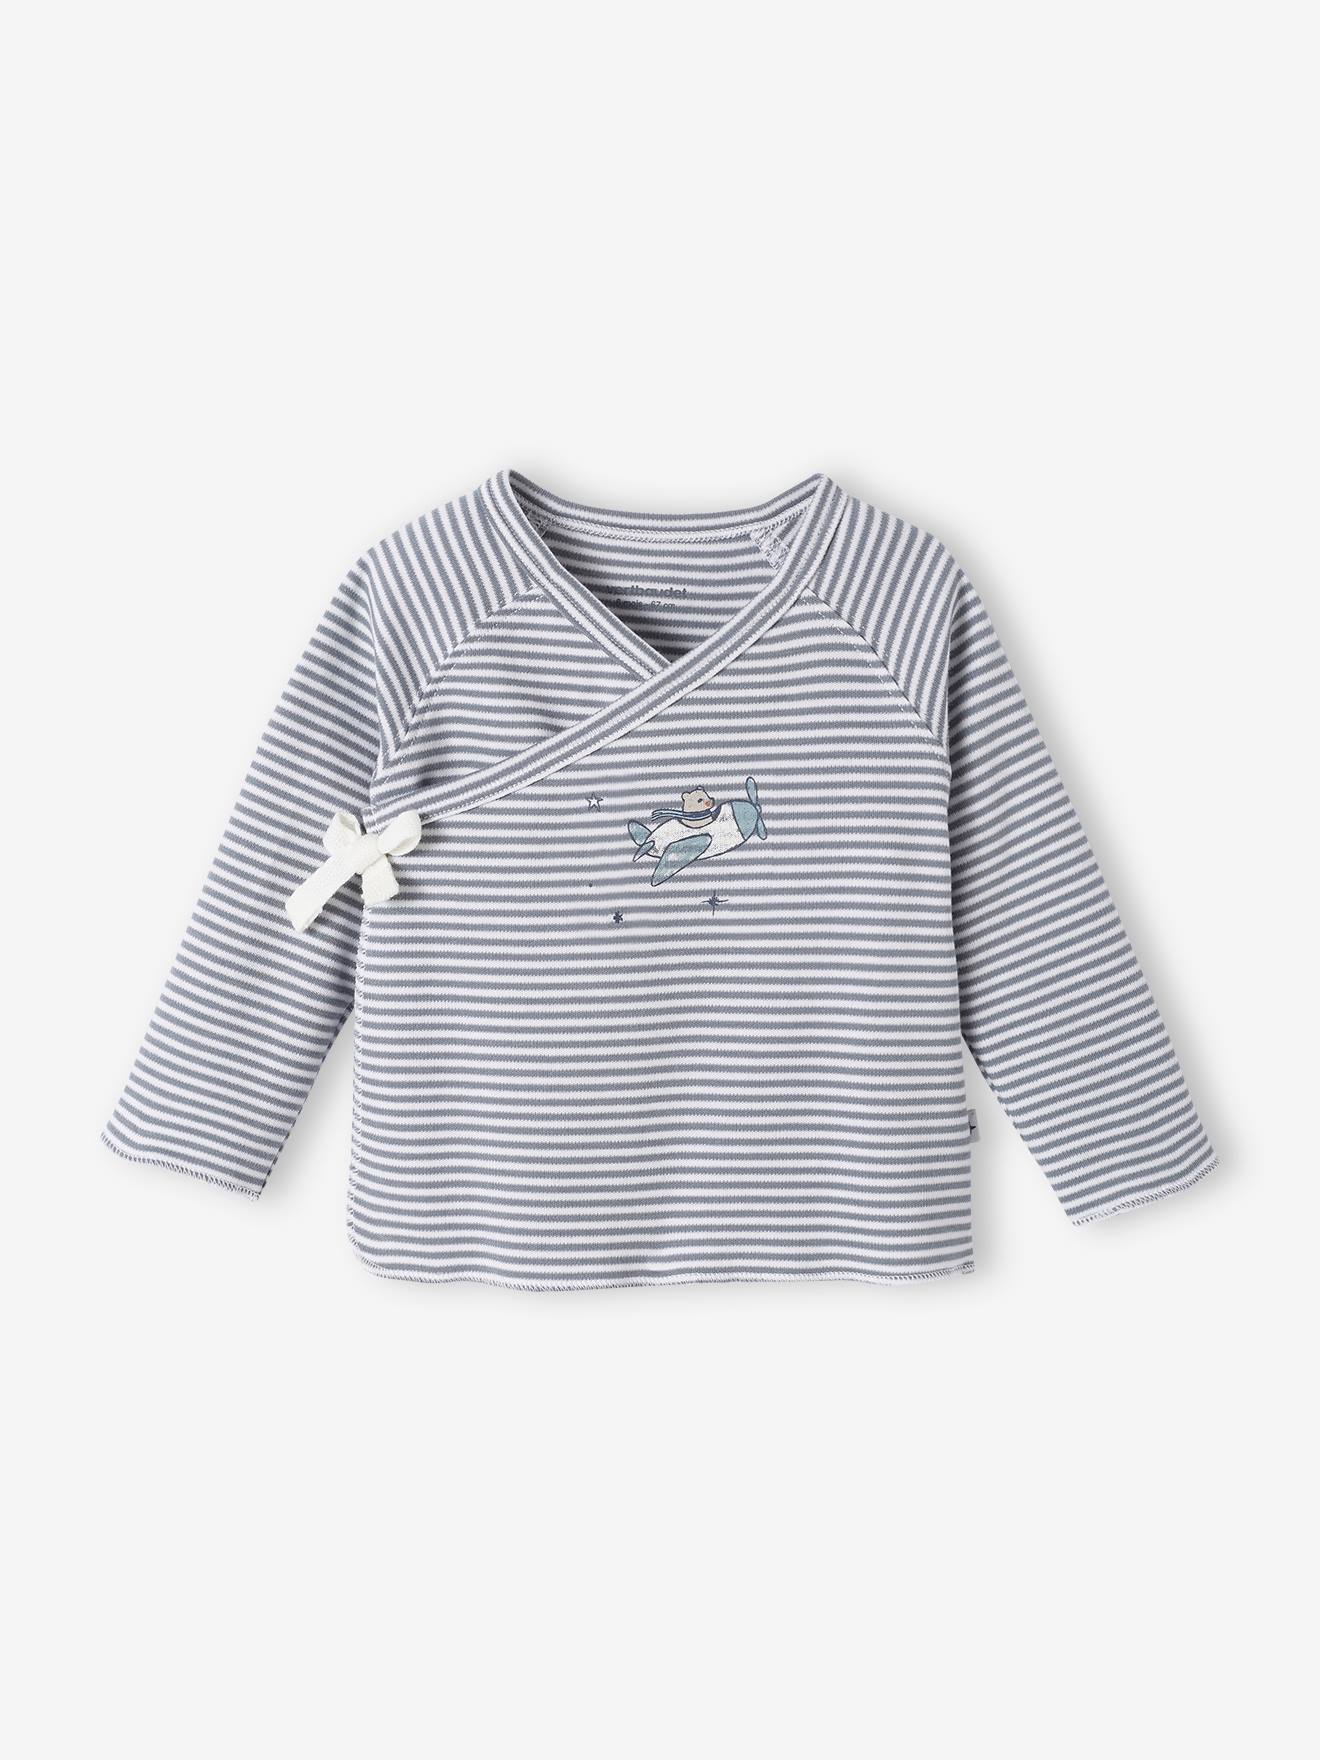 Interlock Cardigan for Newborn Babies, BASICS grey blue